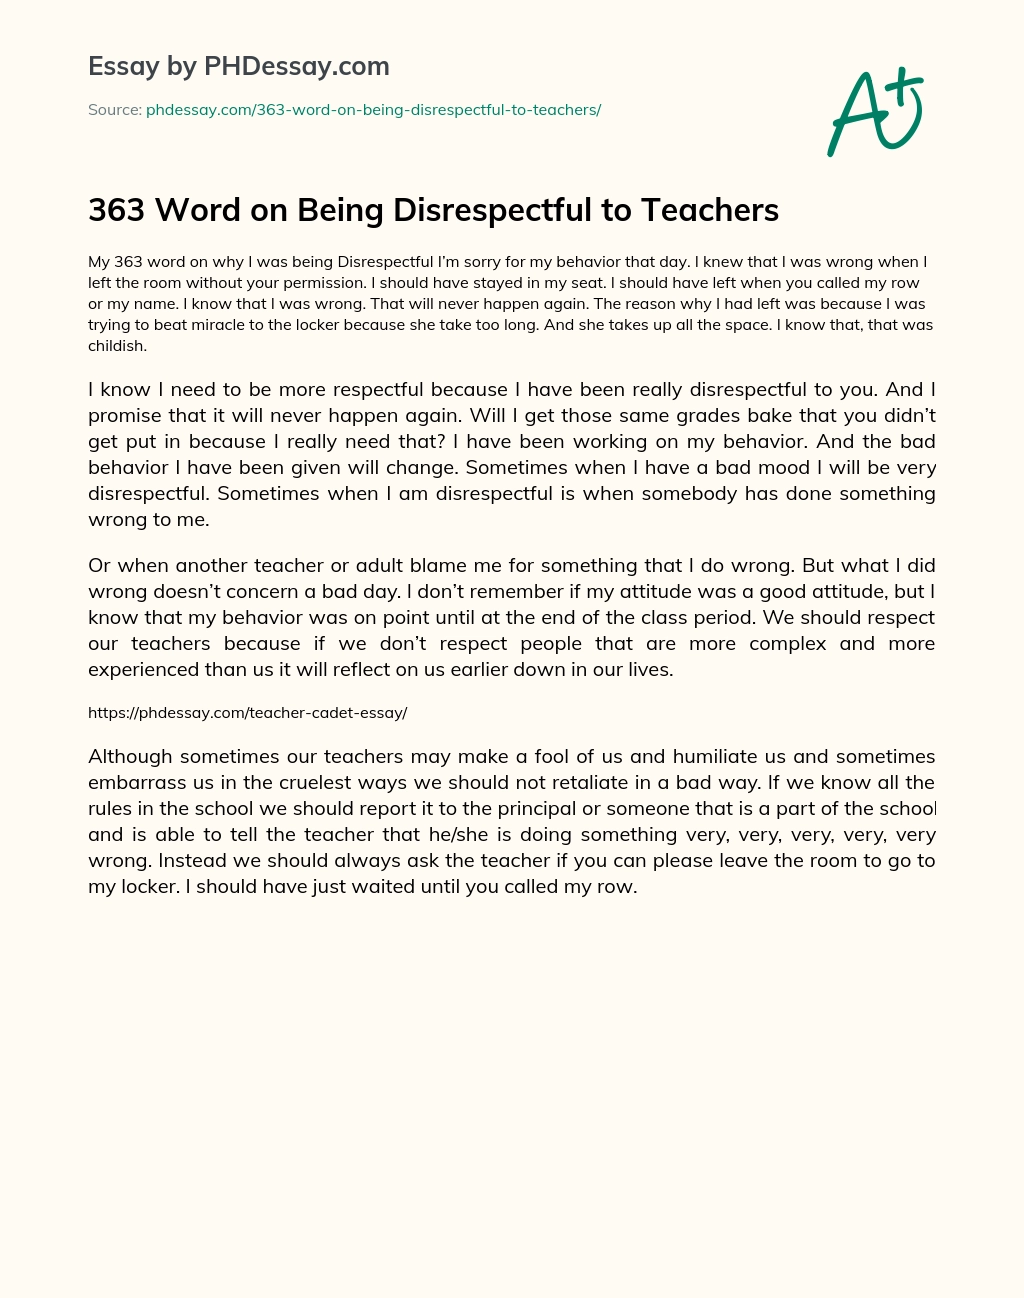 363 Word on Being Disrespectful to Teachers essay